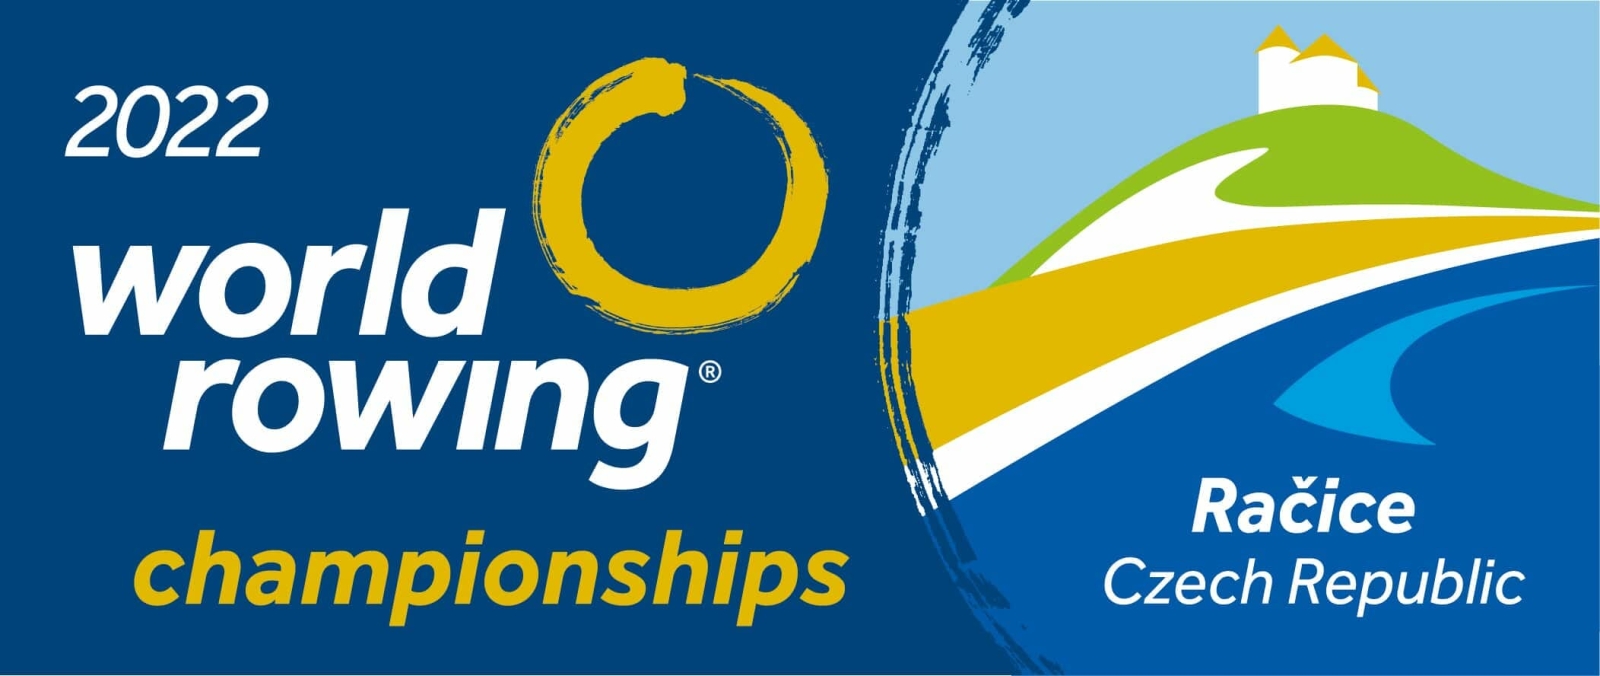 Rowing FISA World Championships 2022 Rowing Totallympics